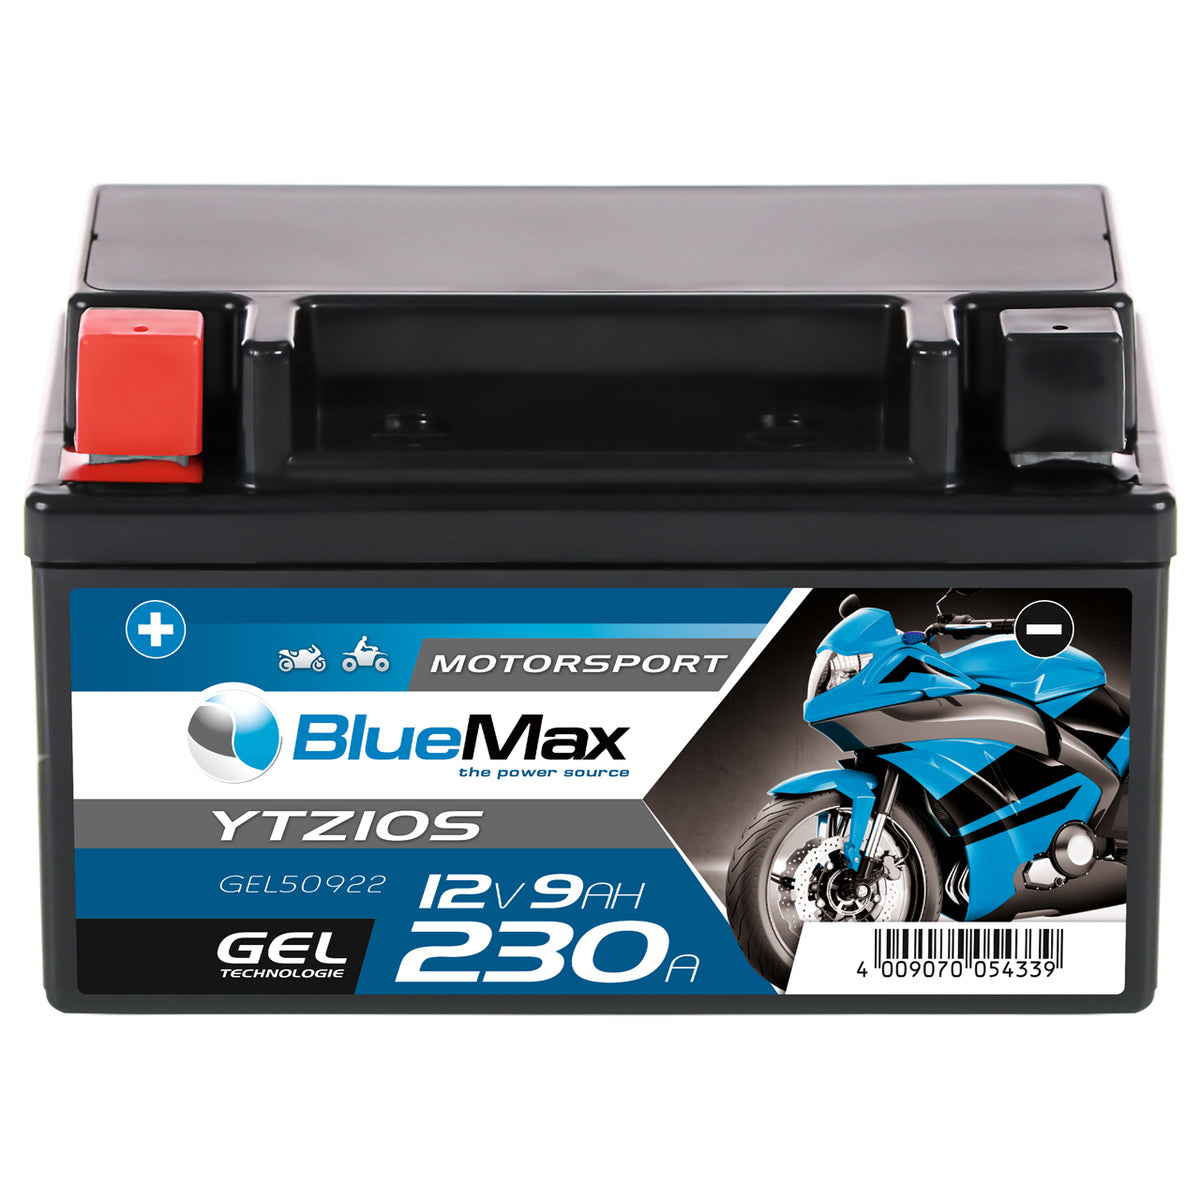 BLUEMAX Motorsport 50922 GEL 12V 9Ah 230A/EN